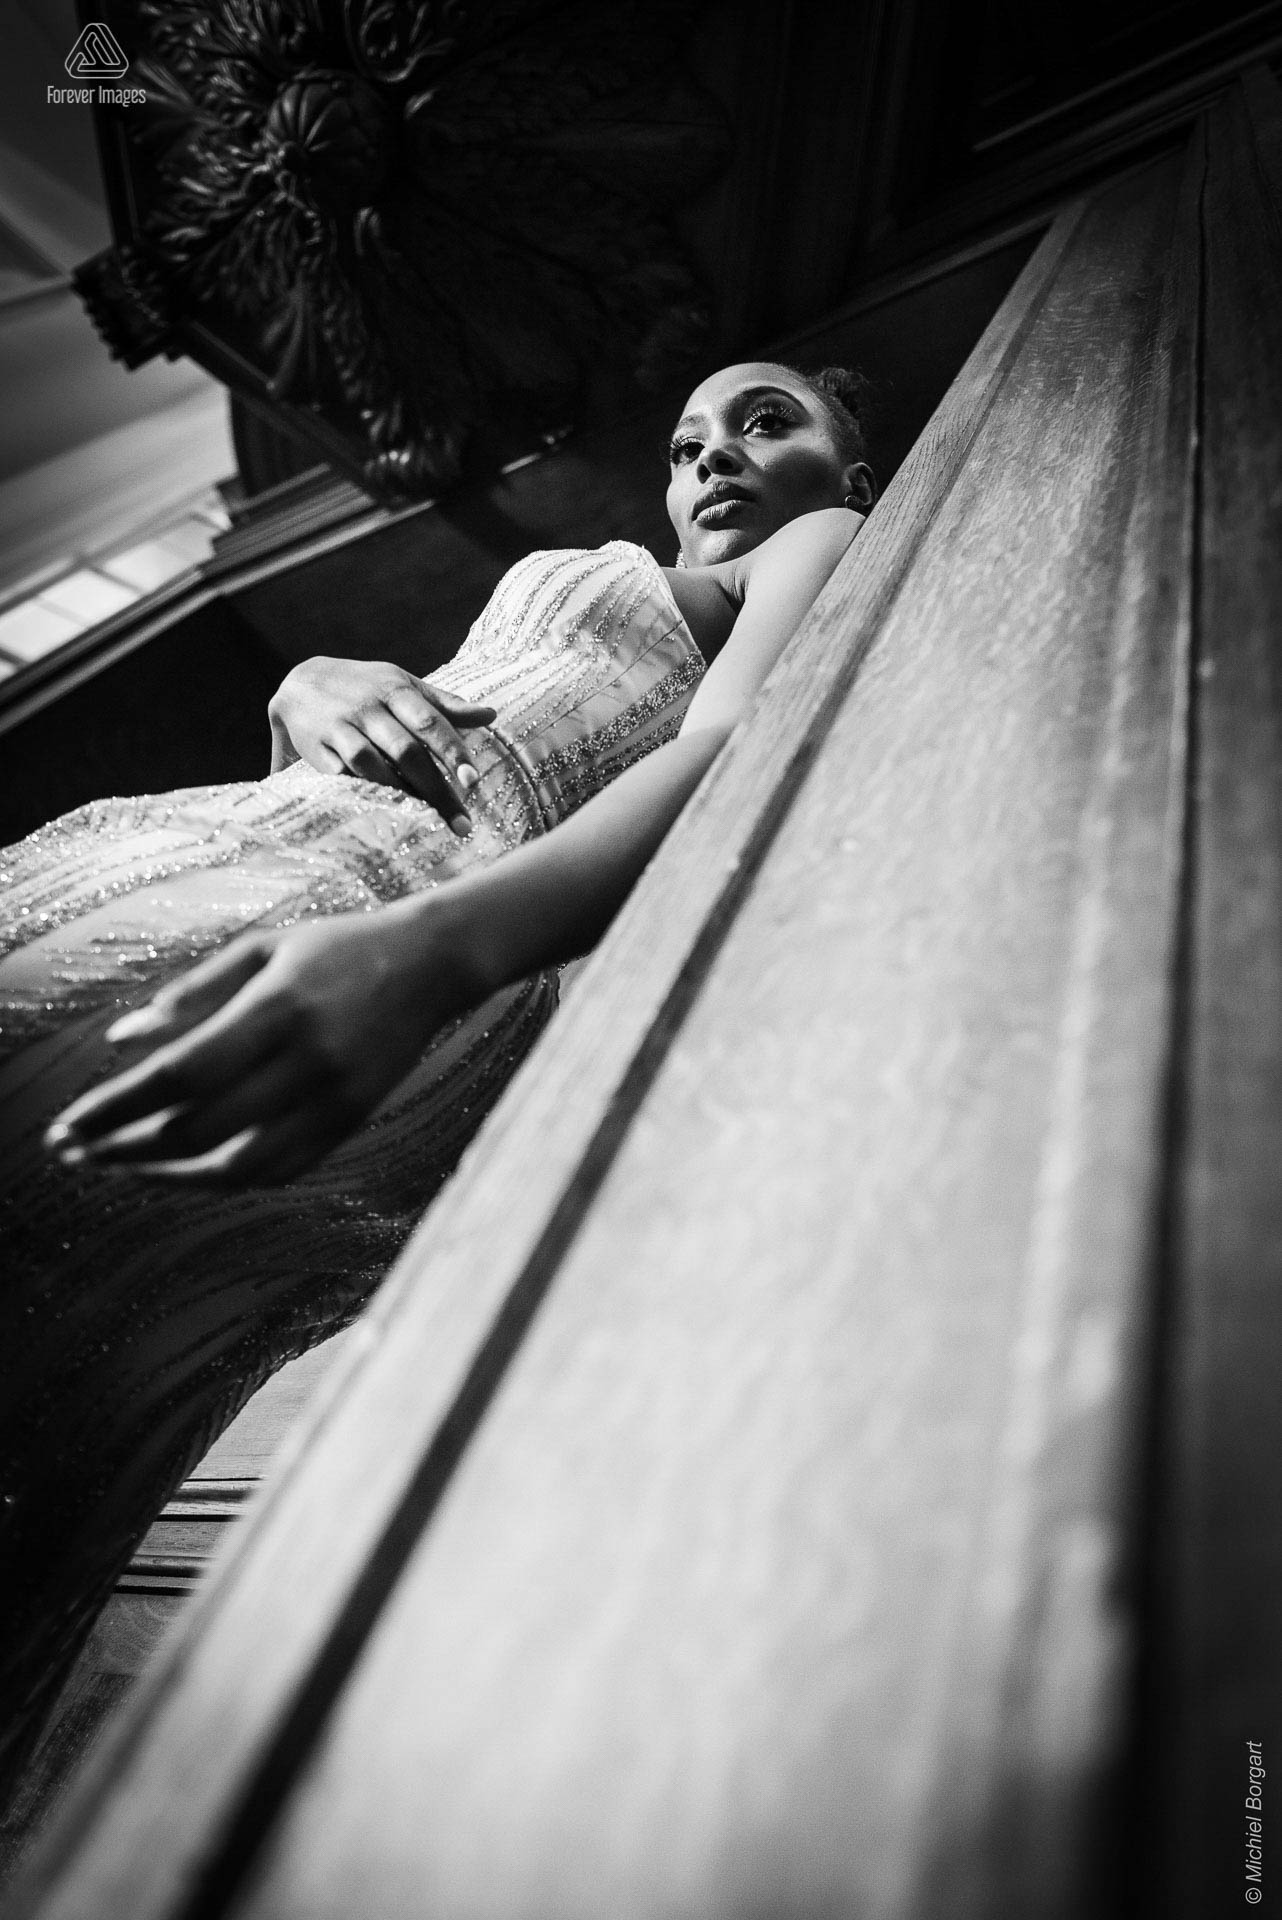 Fashionfoto zwart-wit galajurk leunend in deurpost | Mariana Pietersz Duc Nguyen Koepelkerk Amsterdam | Fashionfotograaf Michiel Borgart - Forever Images.